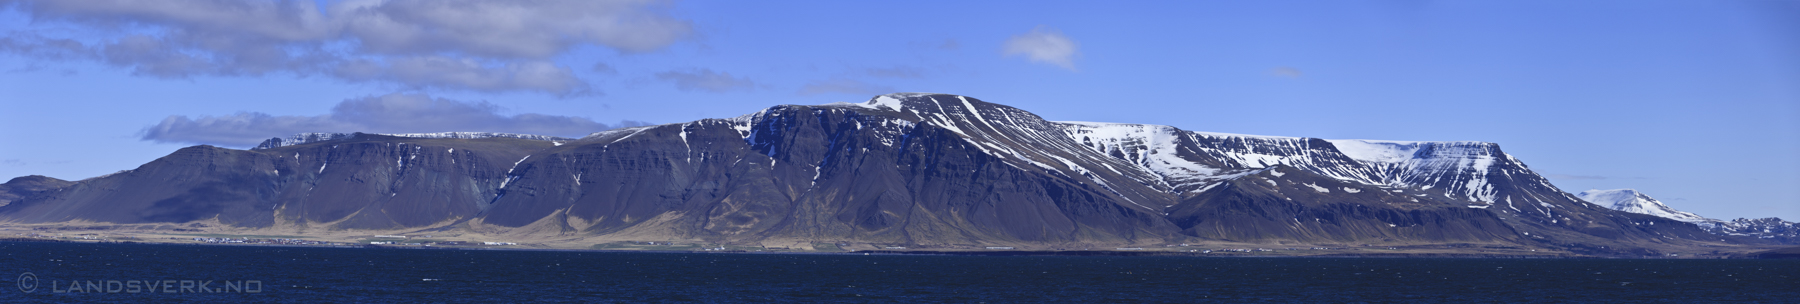 Reykjavik. 

(Canon EOS 5D Mark II / Canon EF 24-70mm f/2.8 L USM)